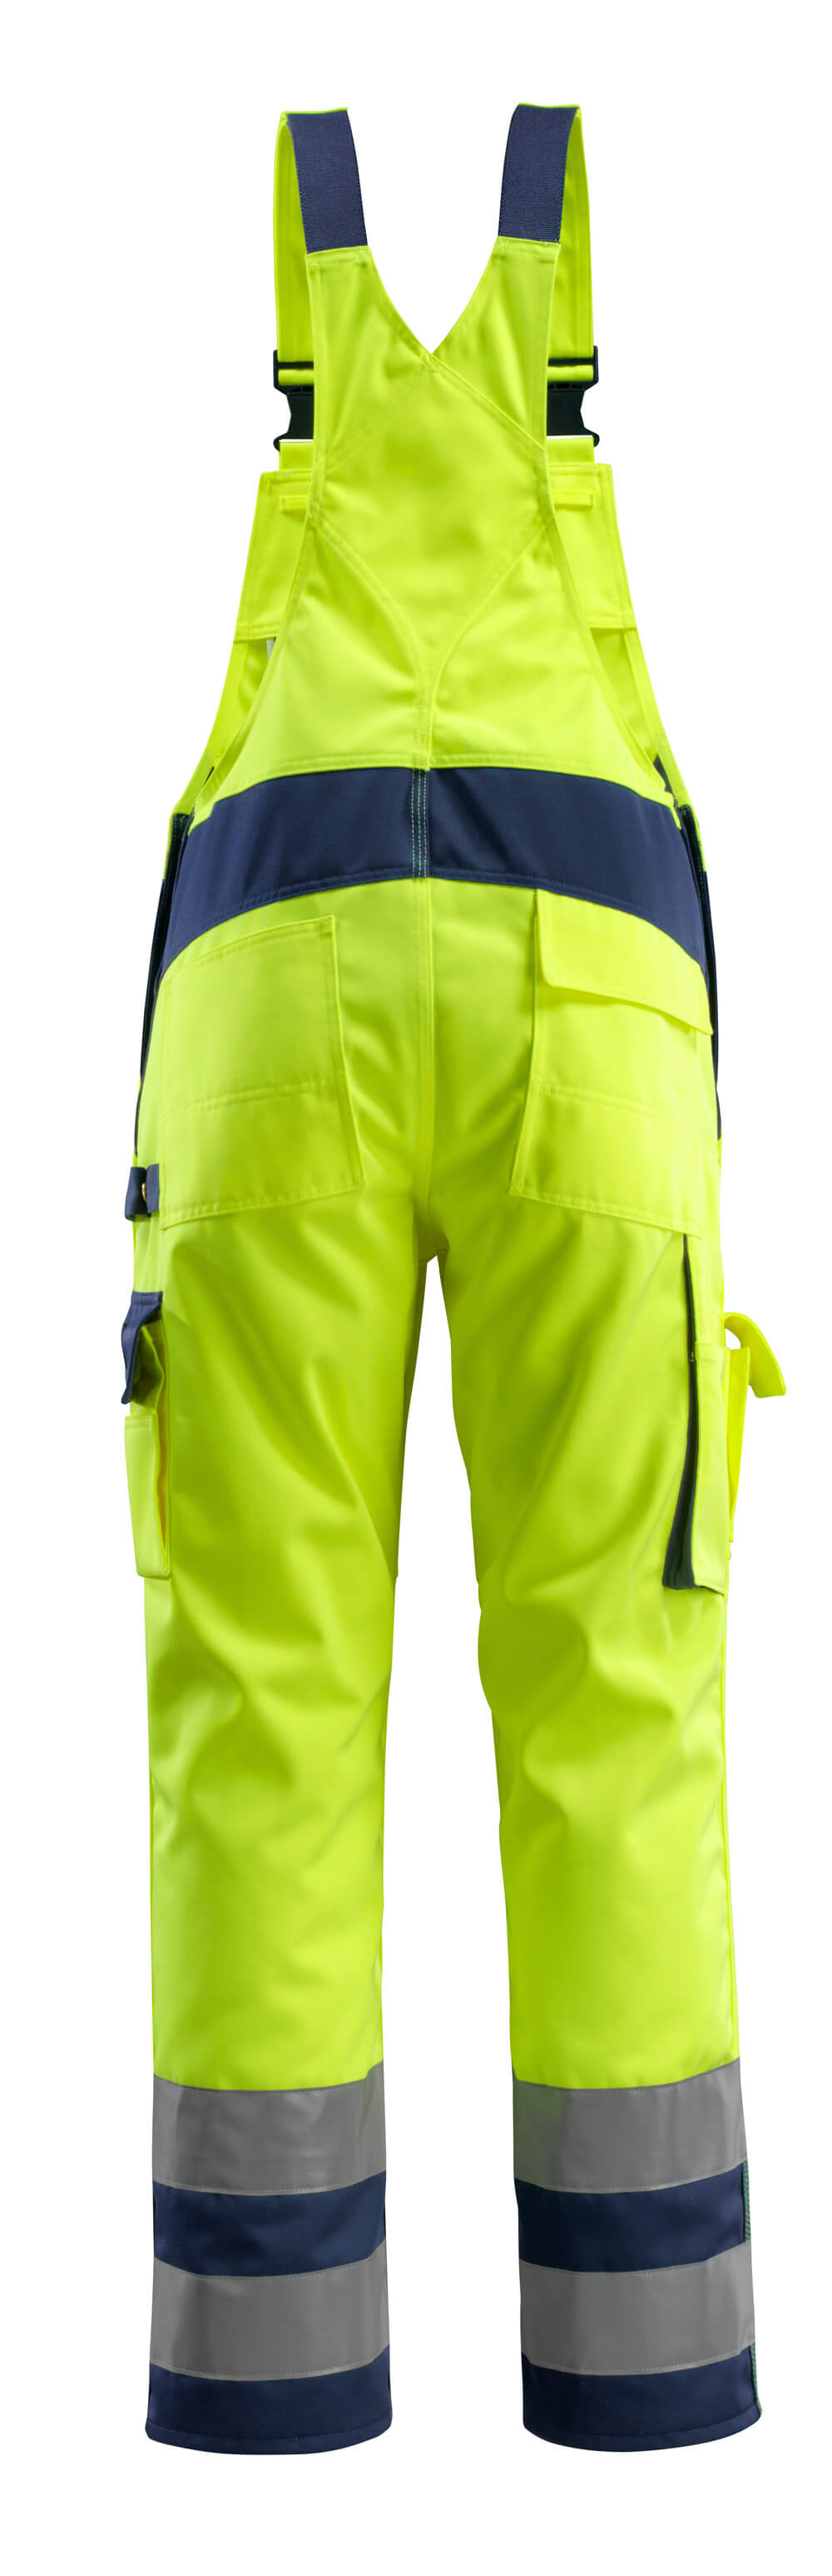 Mascot SAFE COMPETE  Barras Bib & Brace with kneepad pockets 07169 hi-vis yellow/navy